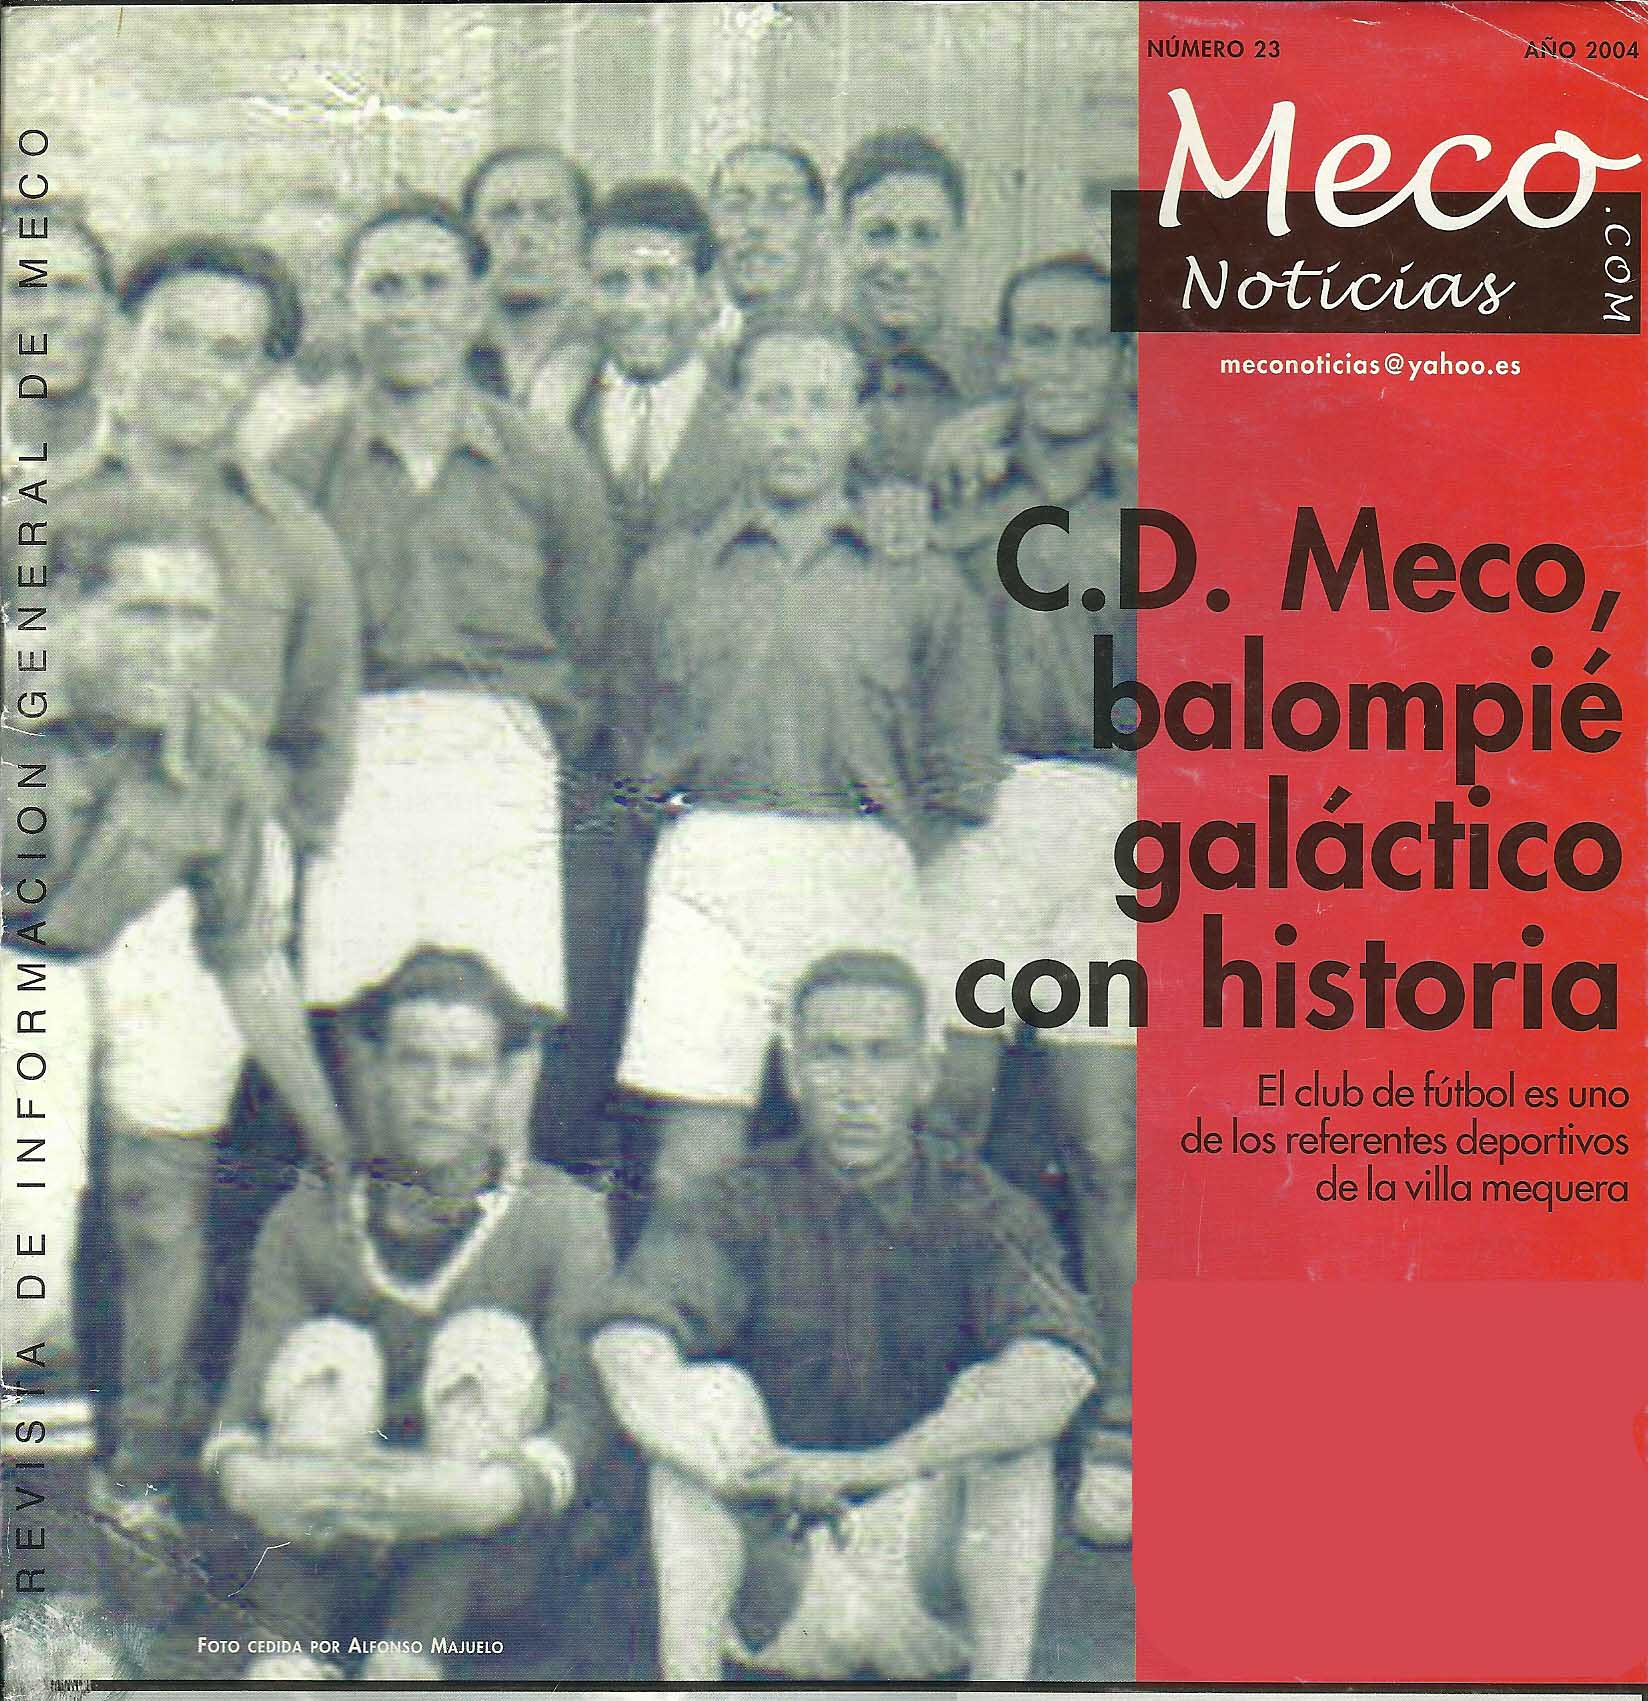 Imagen historia CLUB DEPORTIVO MECO